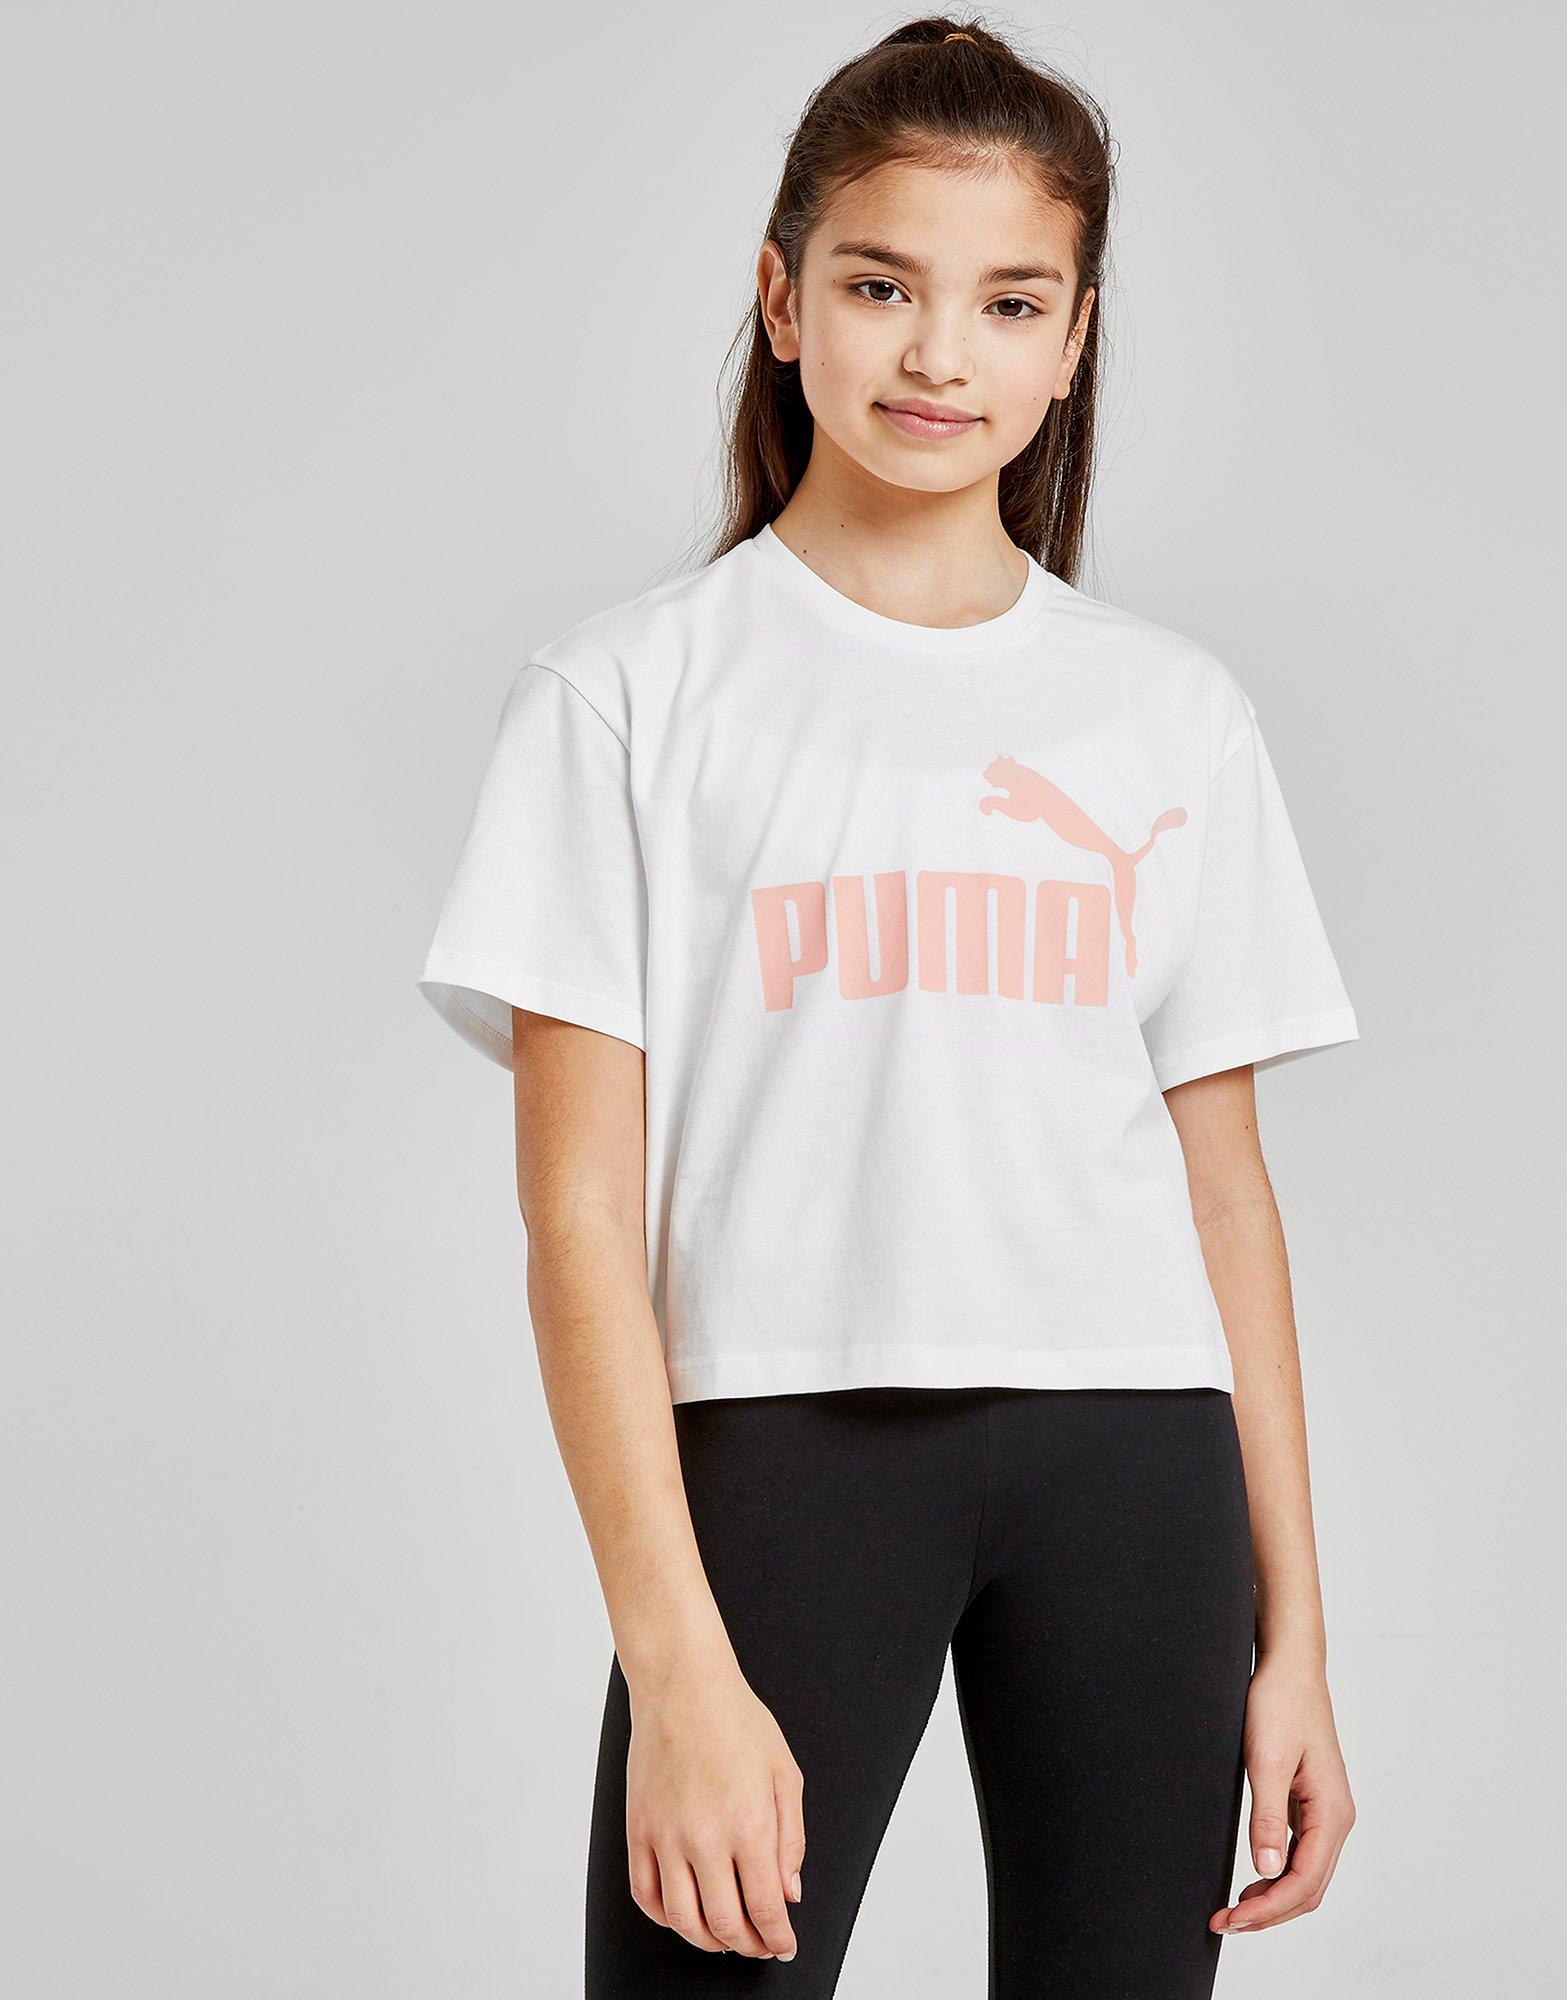 New Puma Girls' Core Crop T-Shirt | eBay